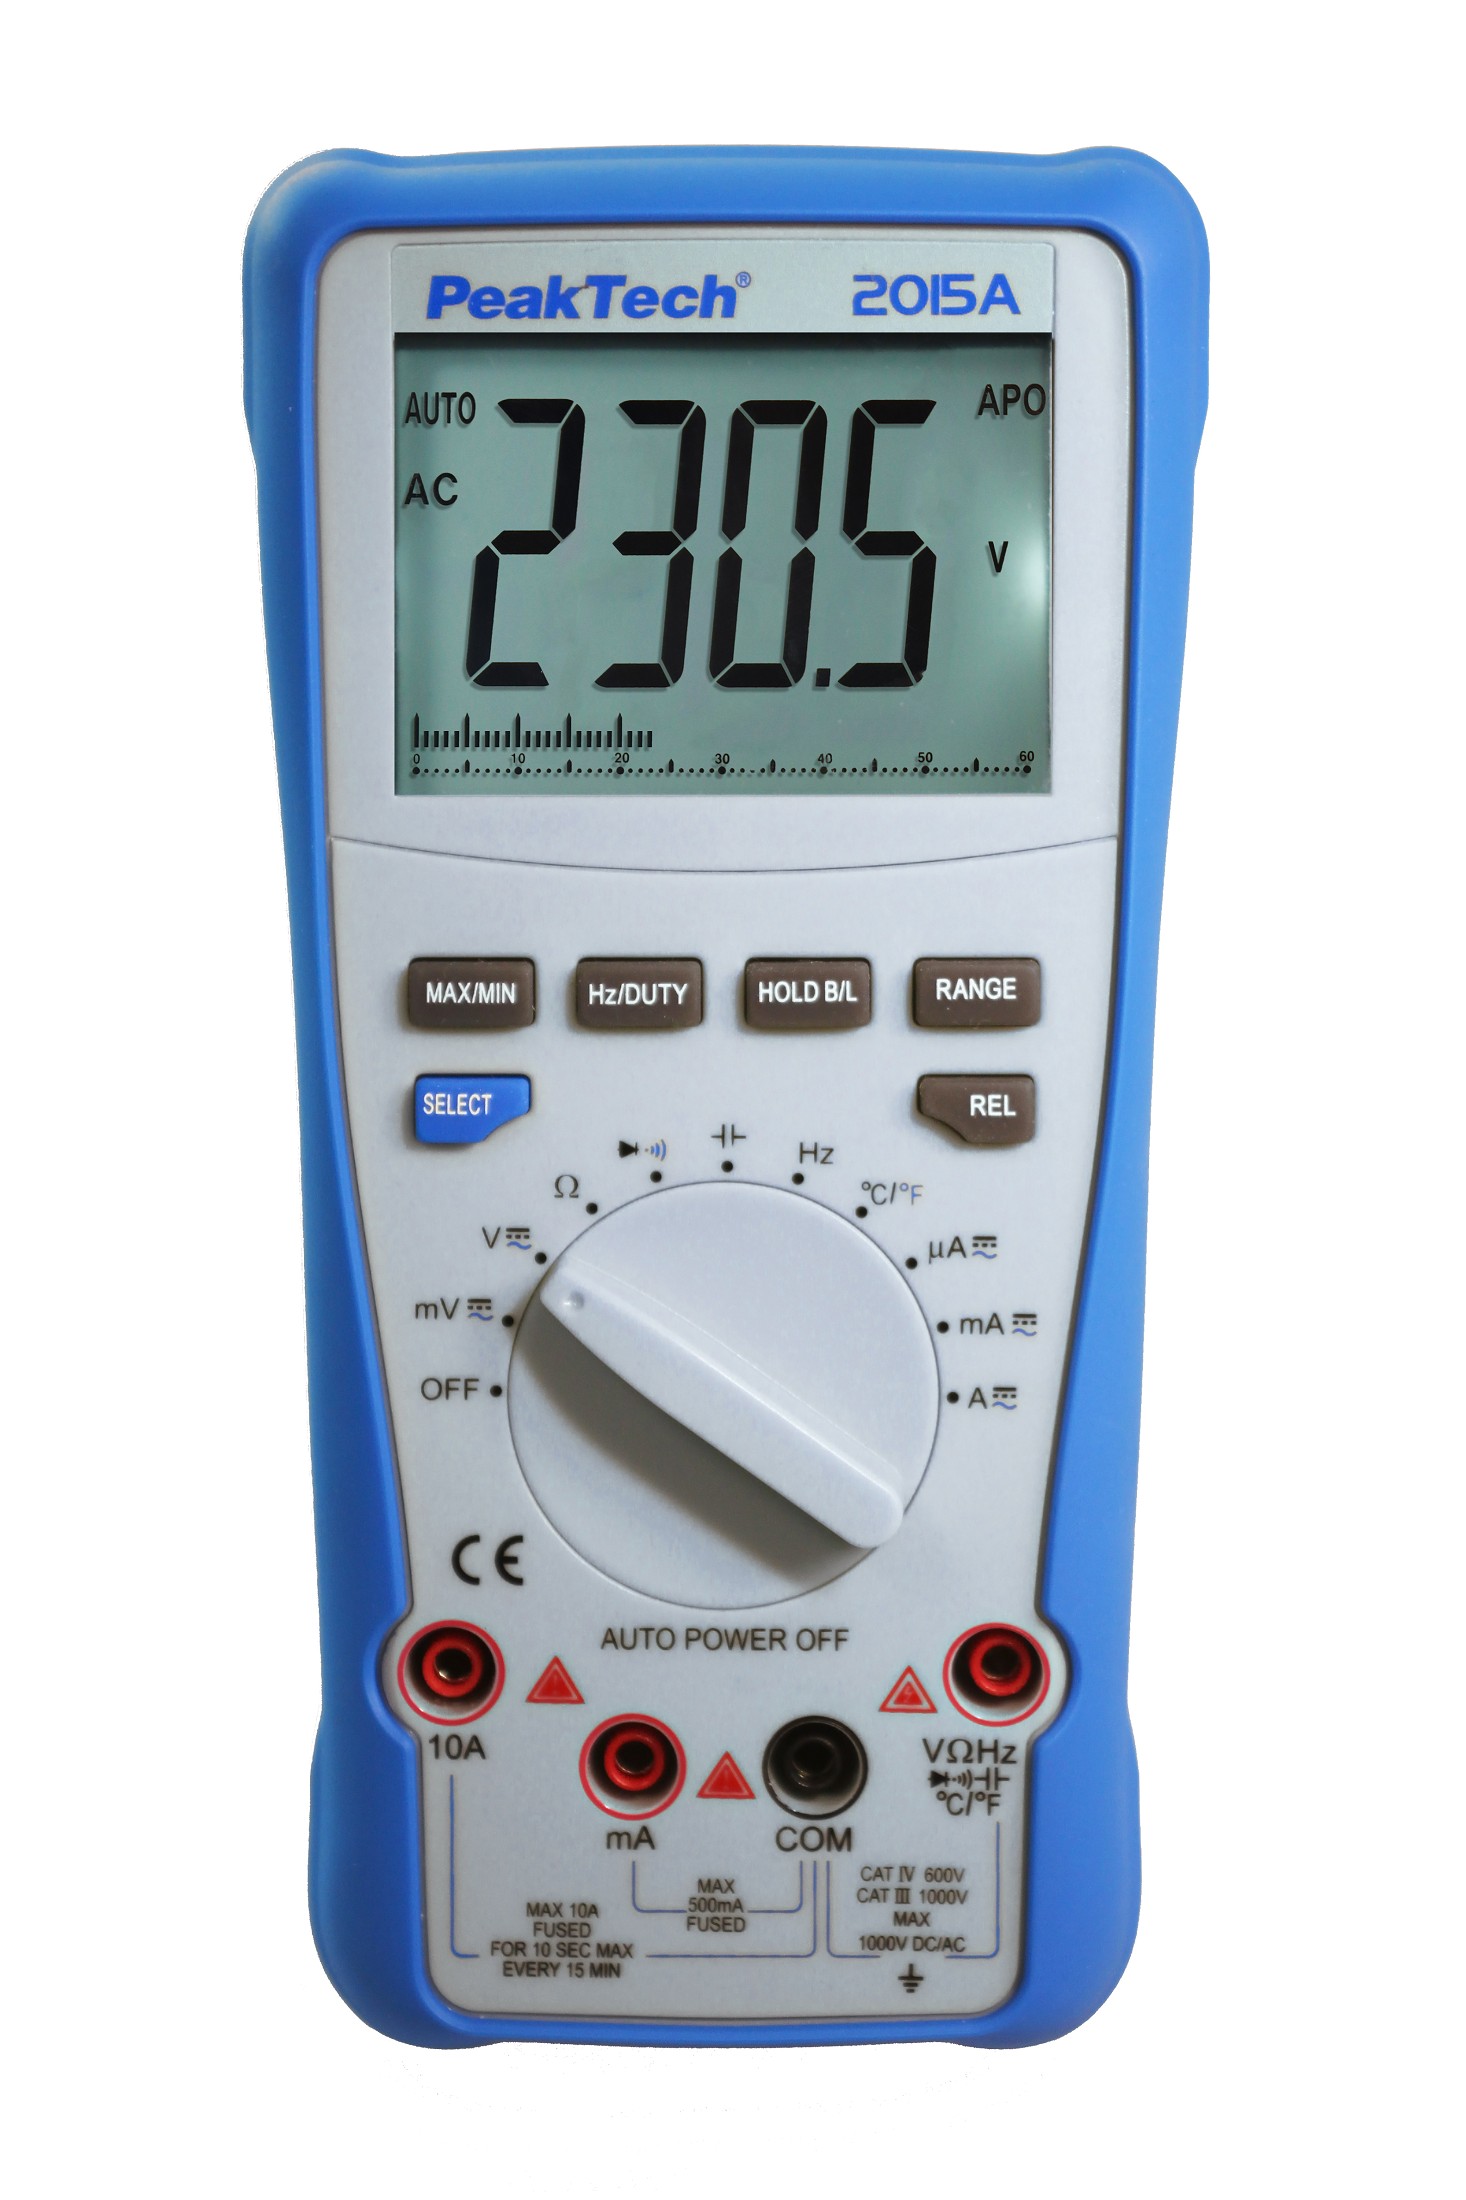  1 x P 3201 PeakTech Analog Multimeter CAT III 600 V Voltmeter  Continuity Tester  Ammeter 10 A 500 V AC/DC   Ohm Meter  